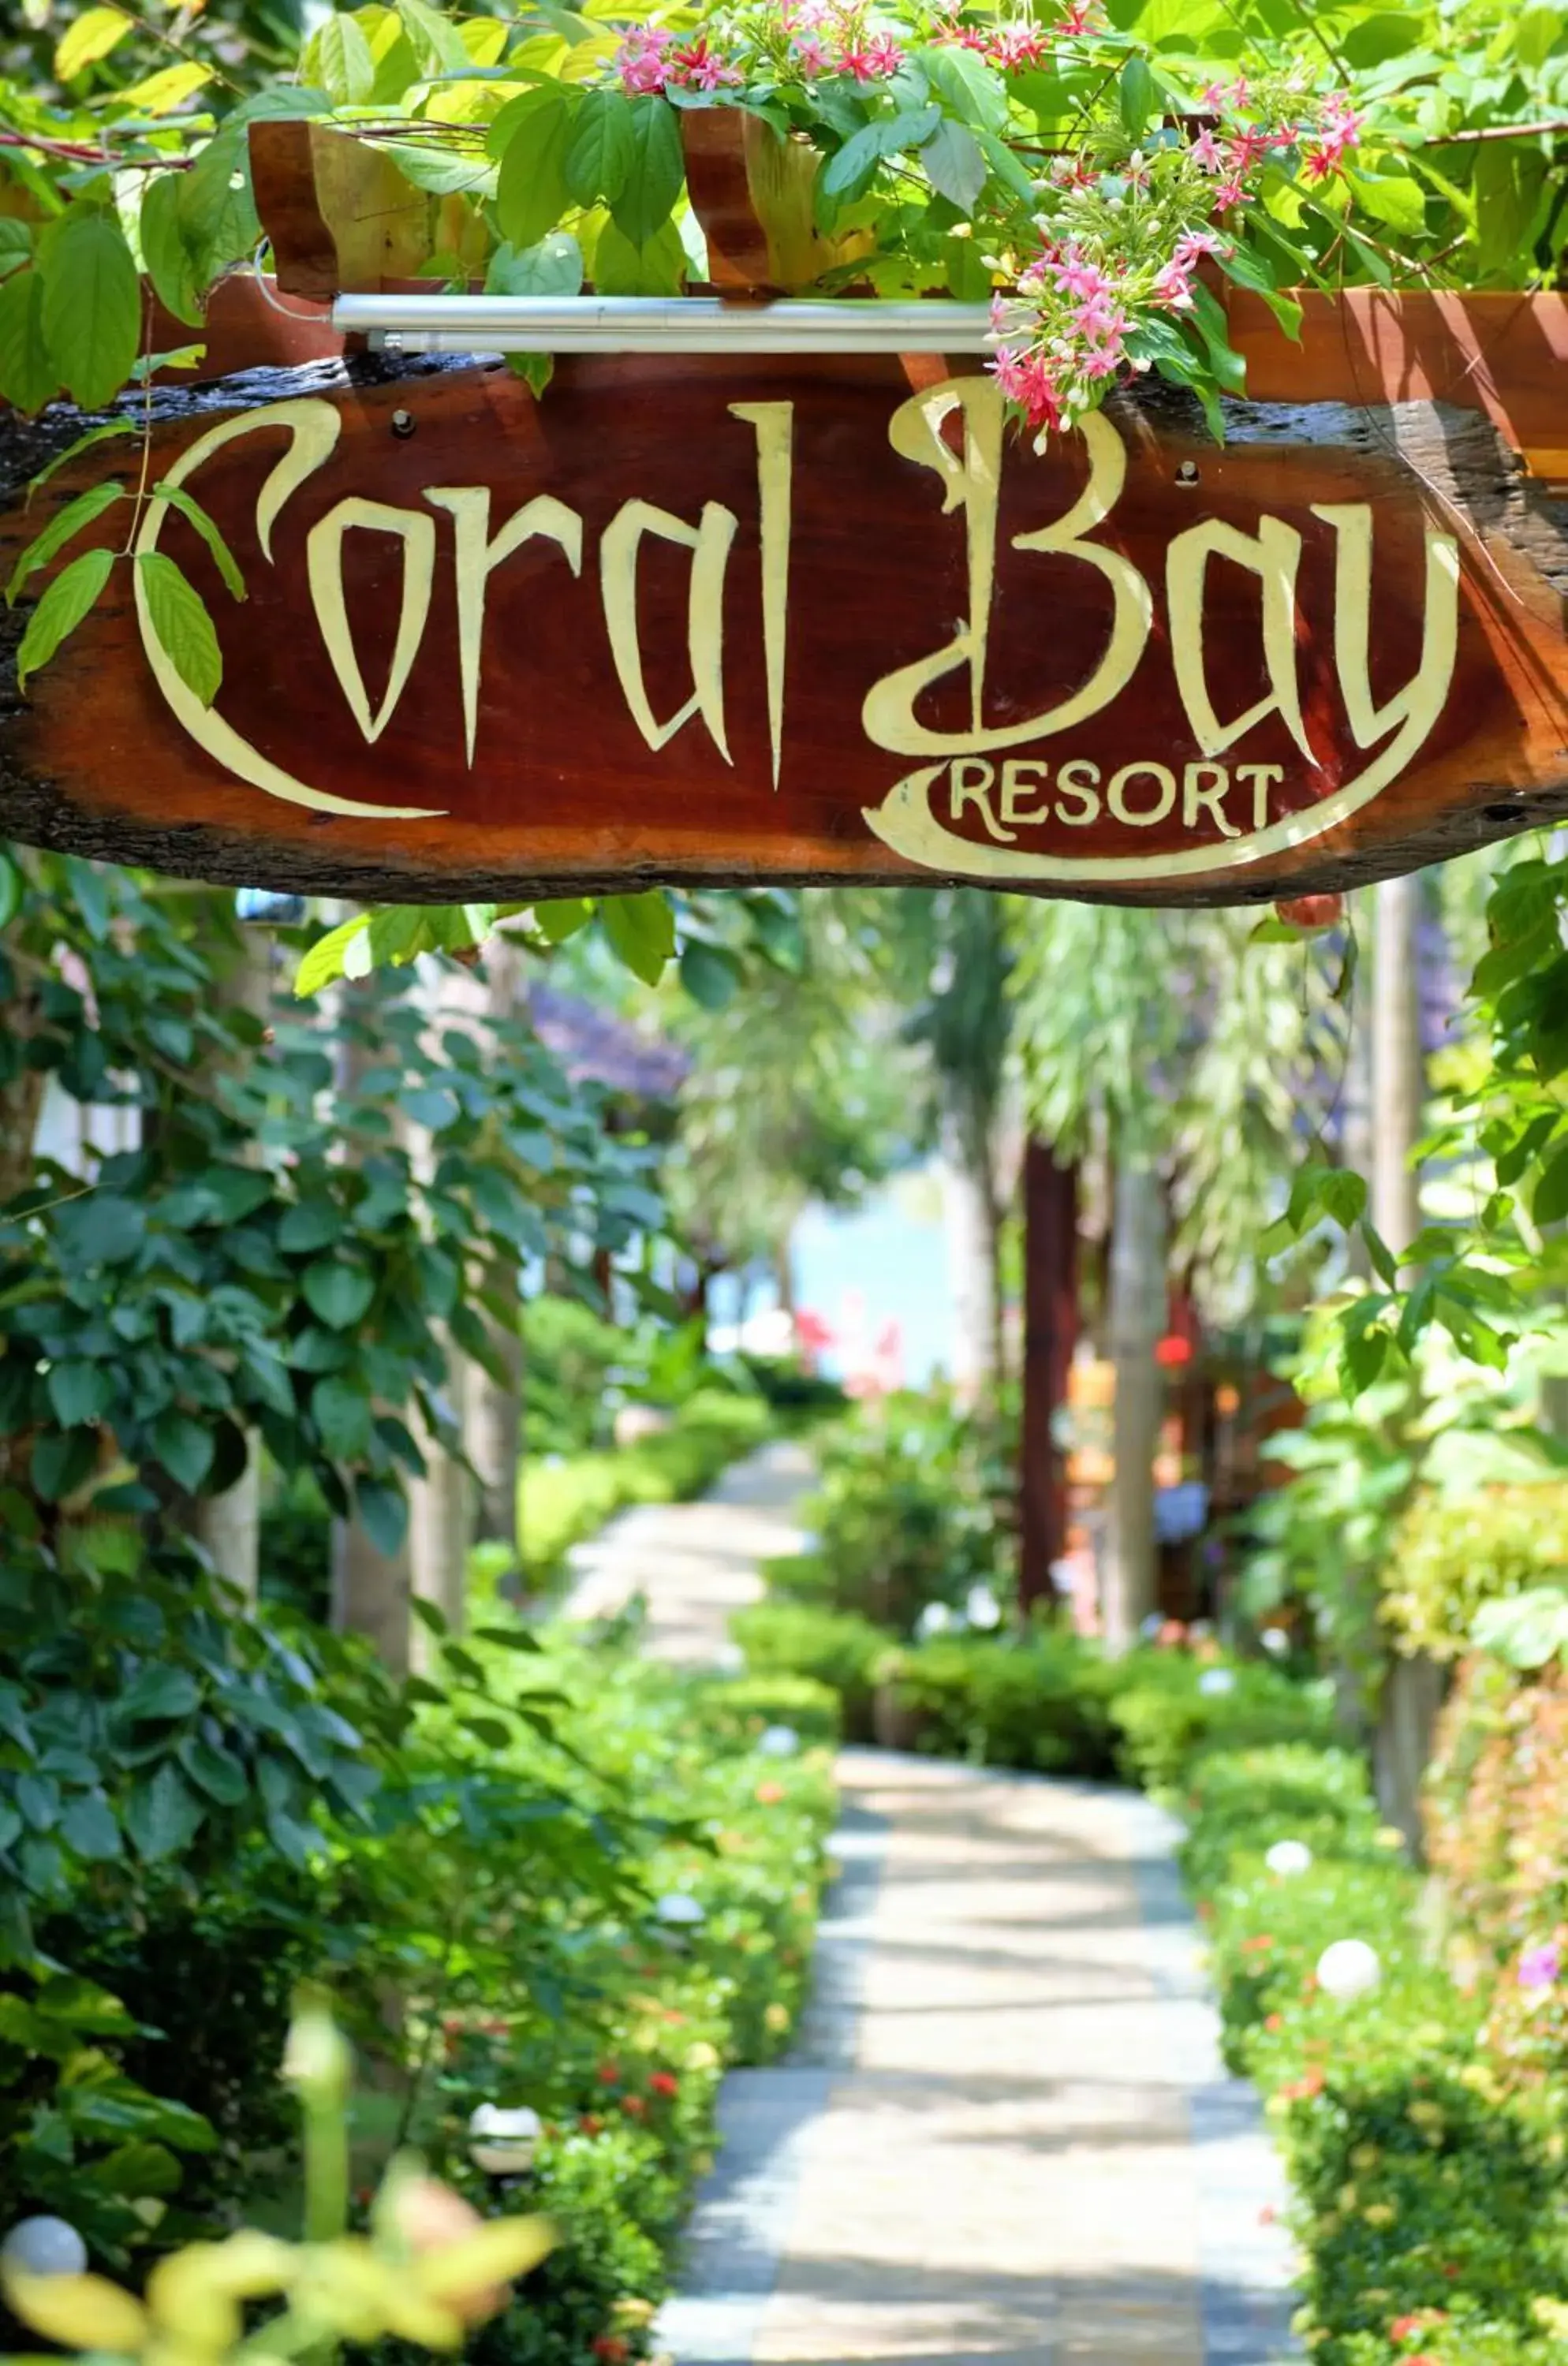 Bird's eye view in Coral Bay Resort